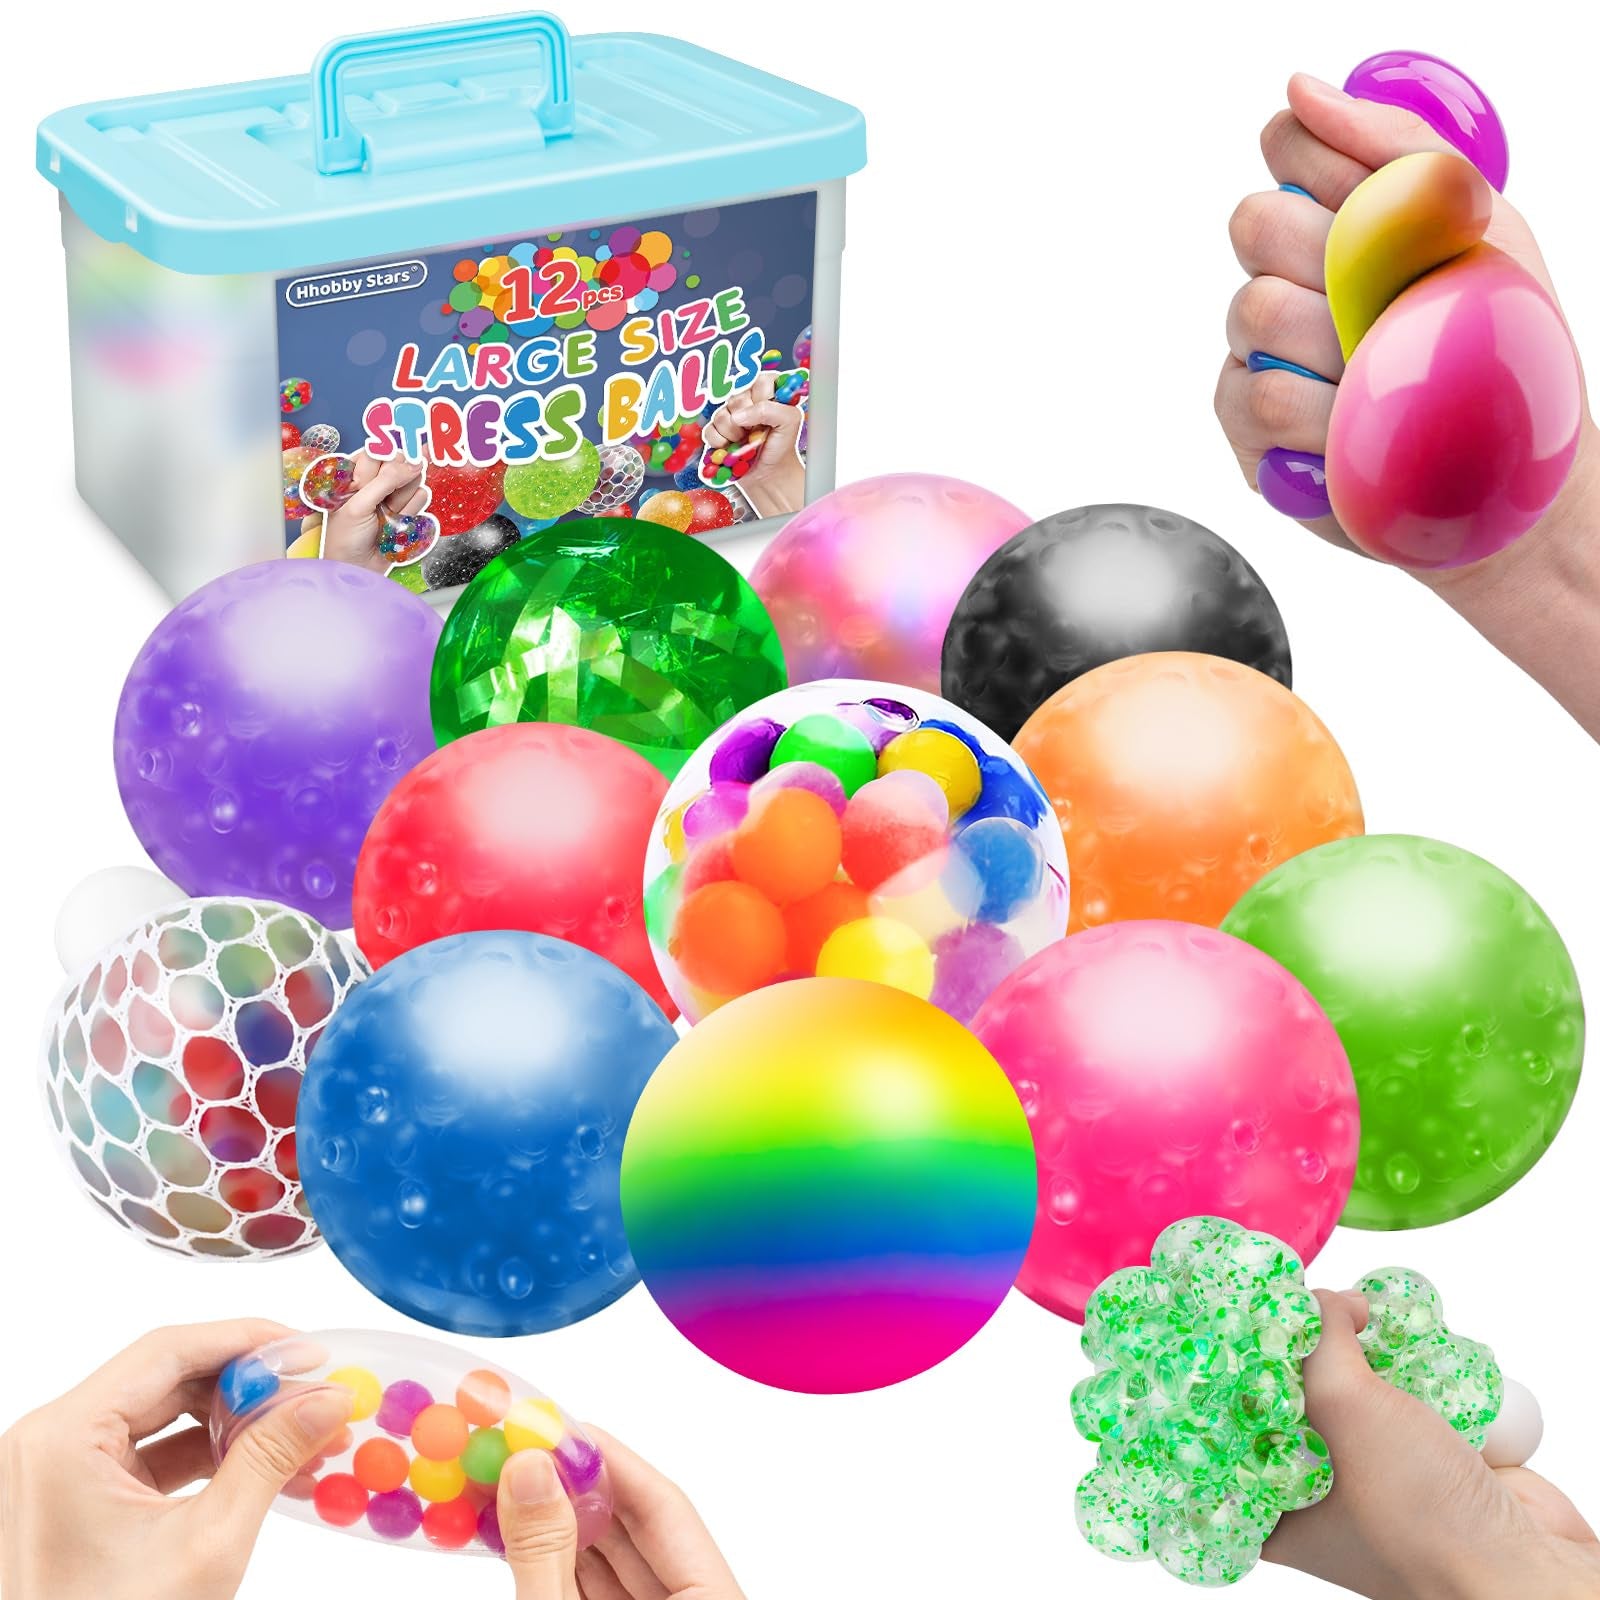 Hhobby toys paquetes de 12 bolas grandes antiestrés